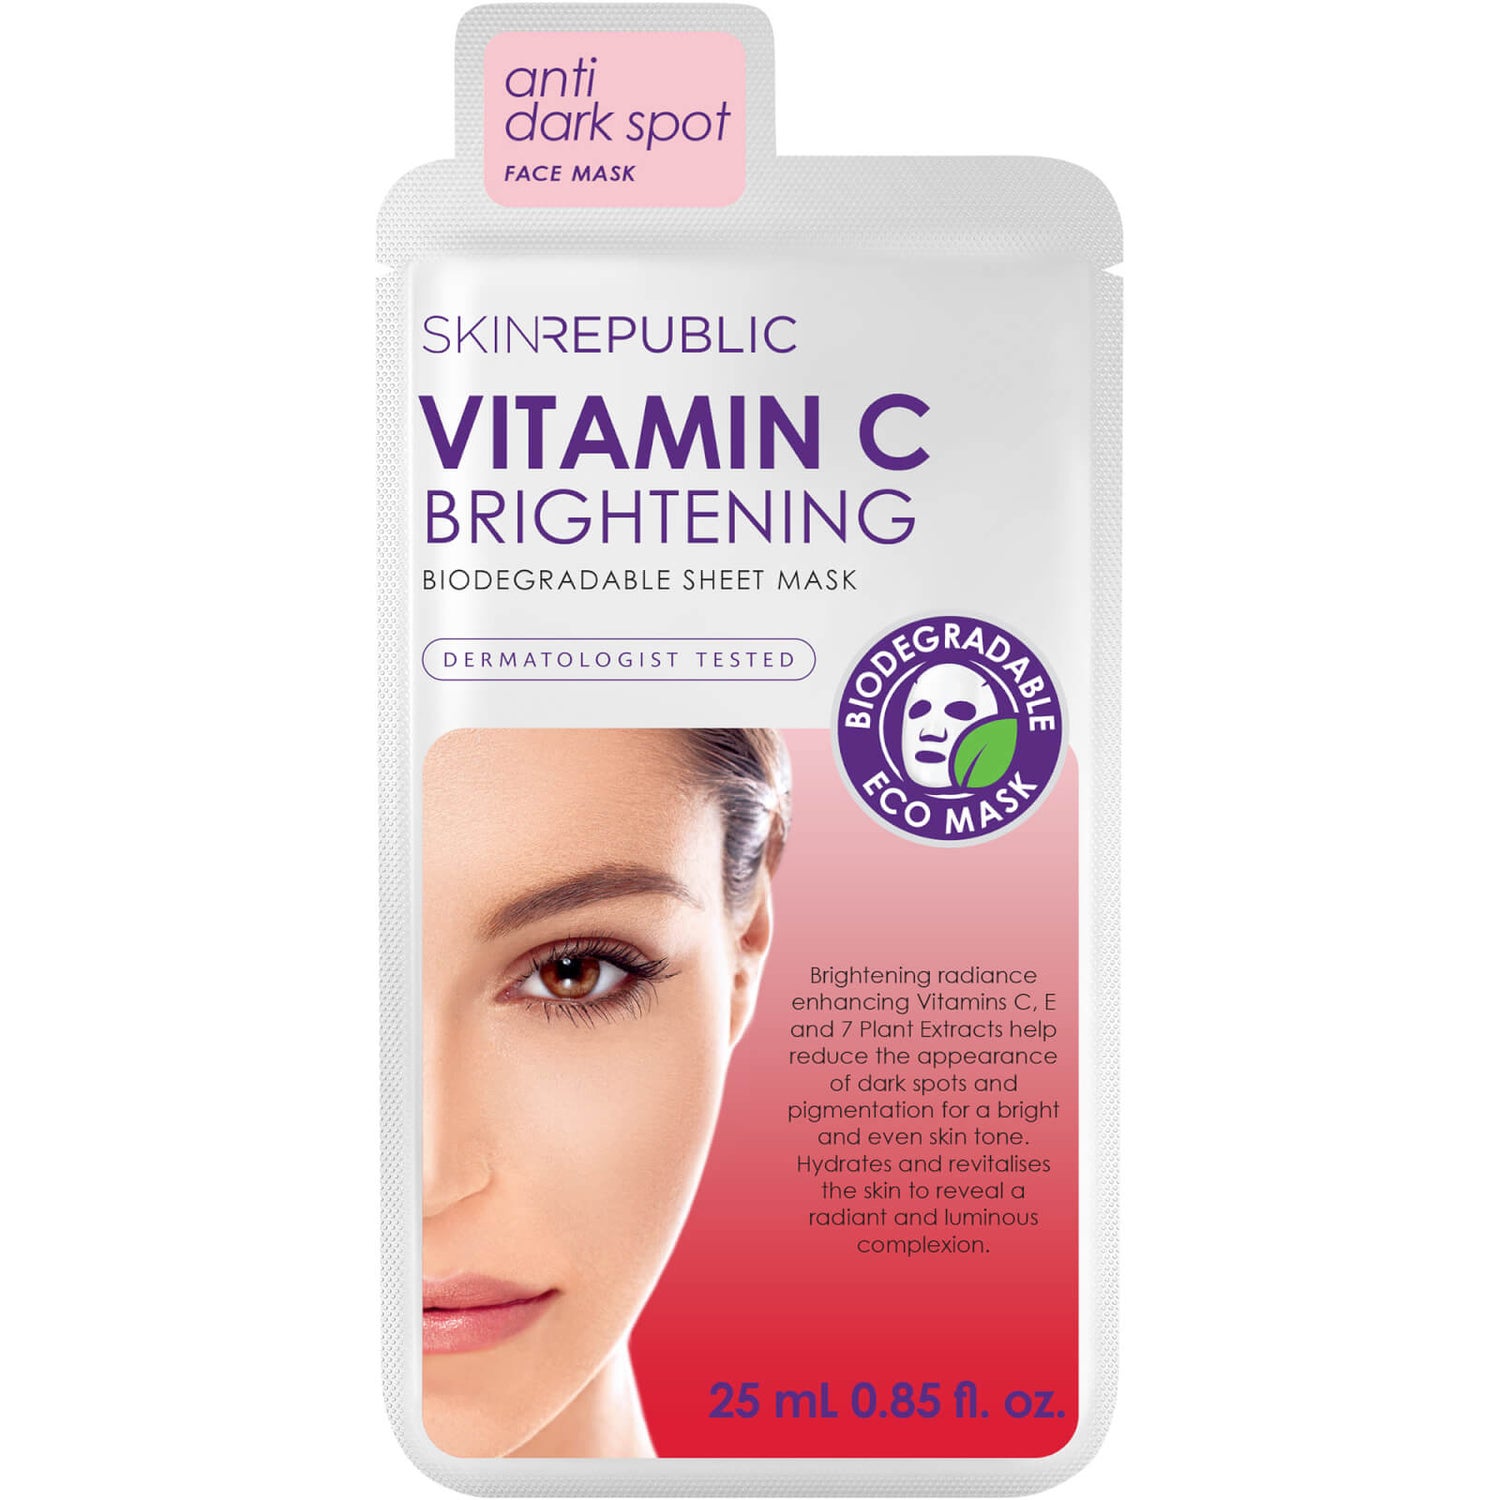 Skin Republic Brightening Vitamin C Face Mask - 25ml